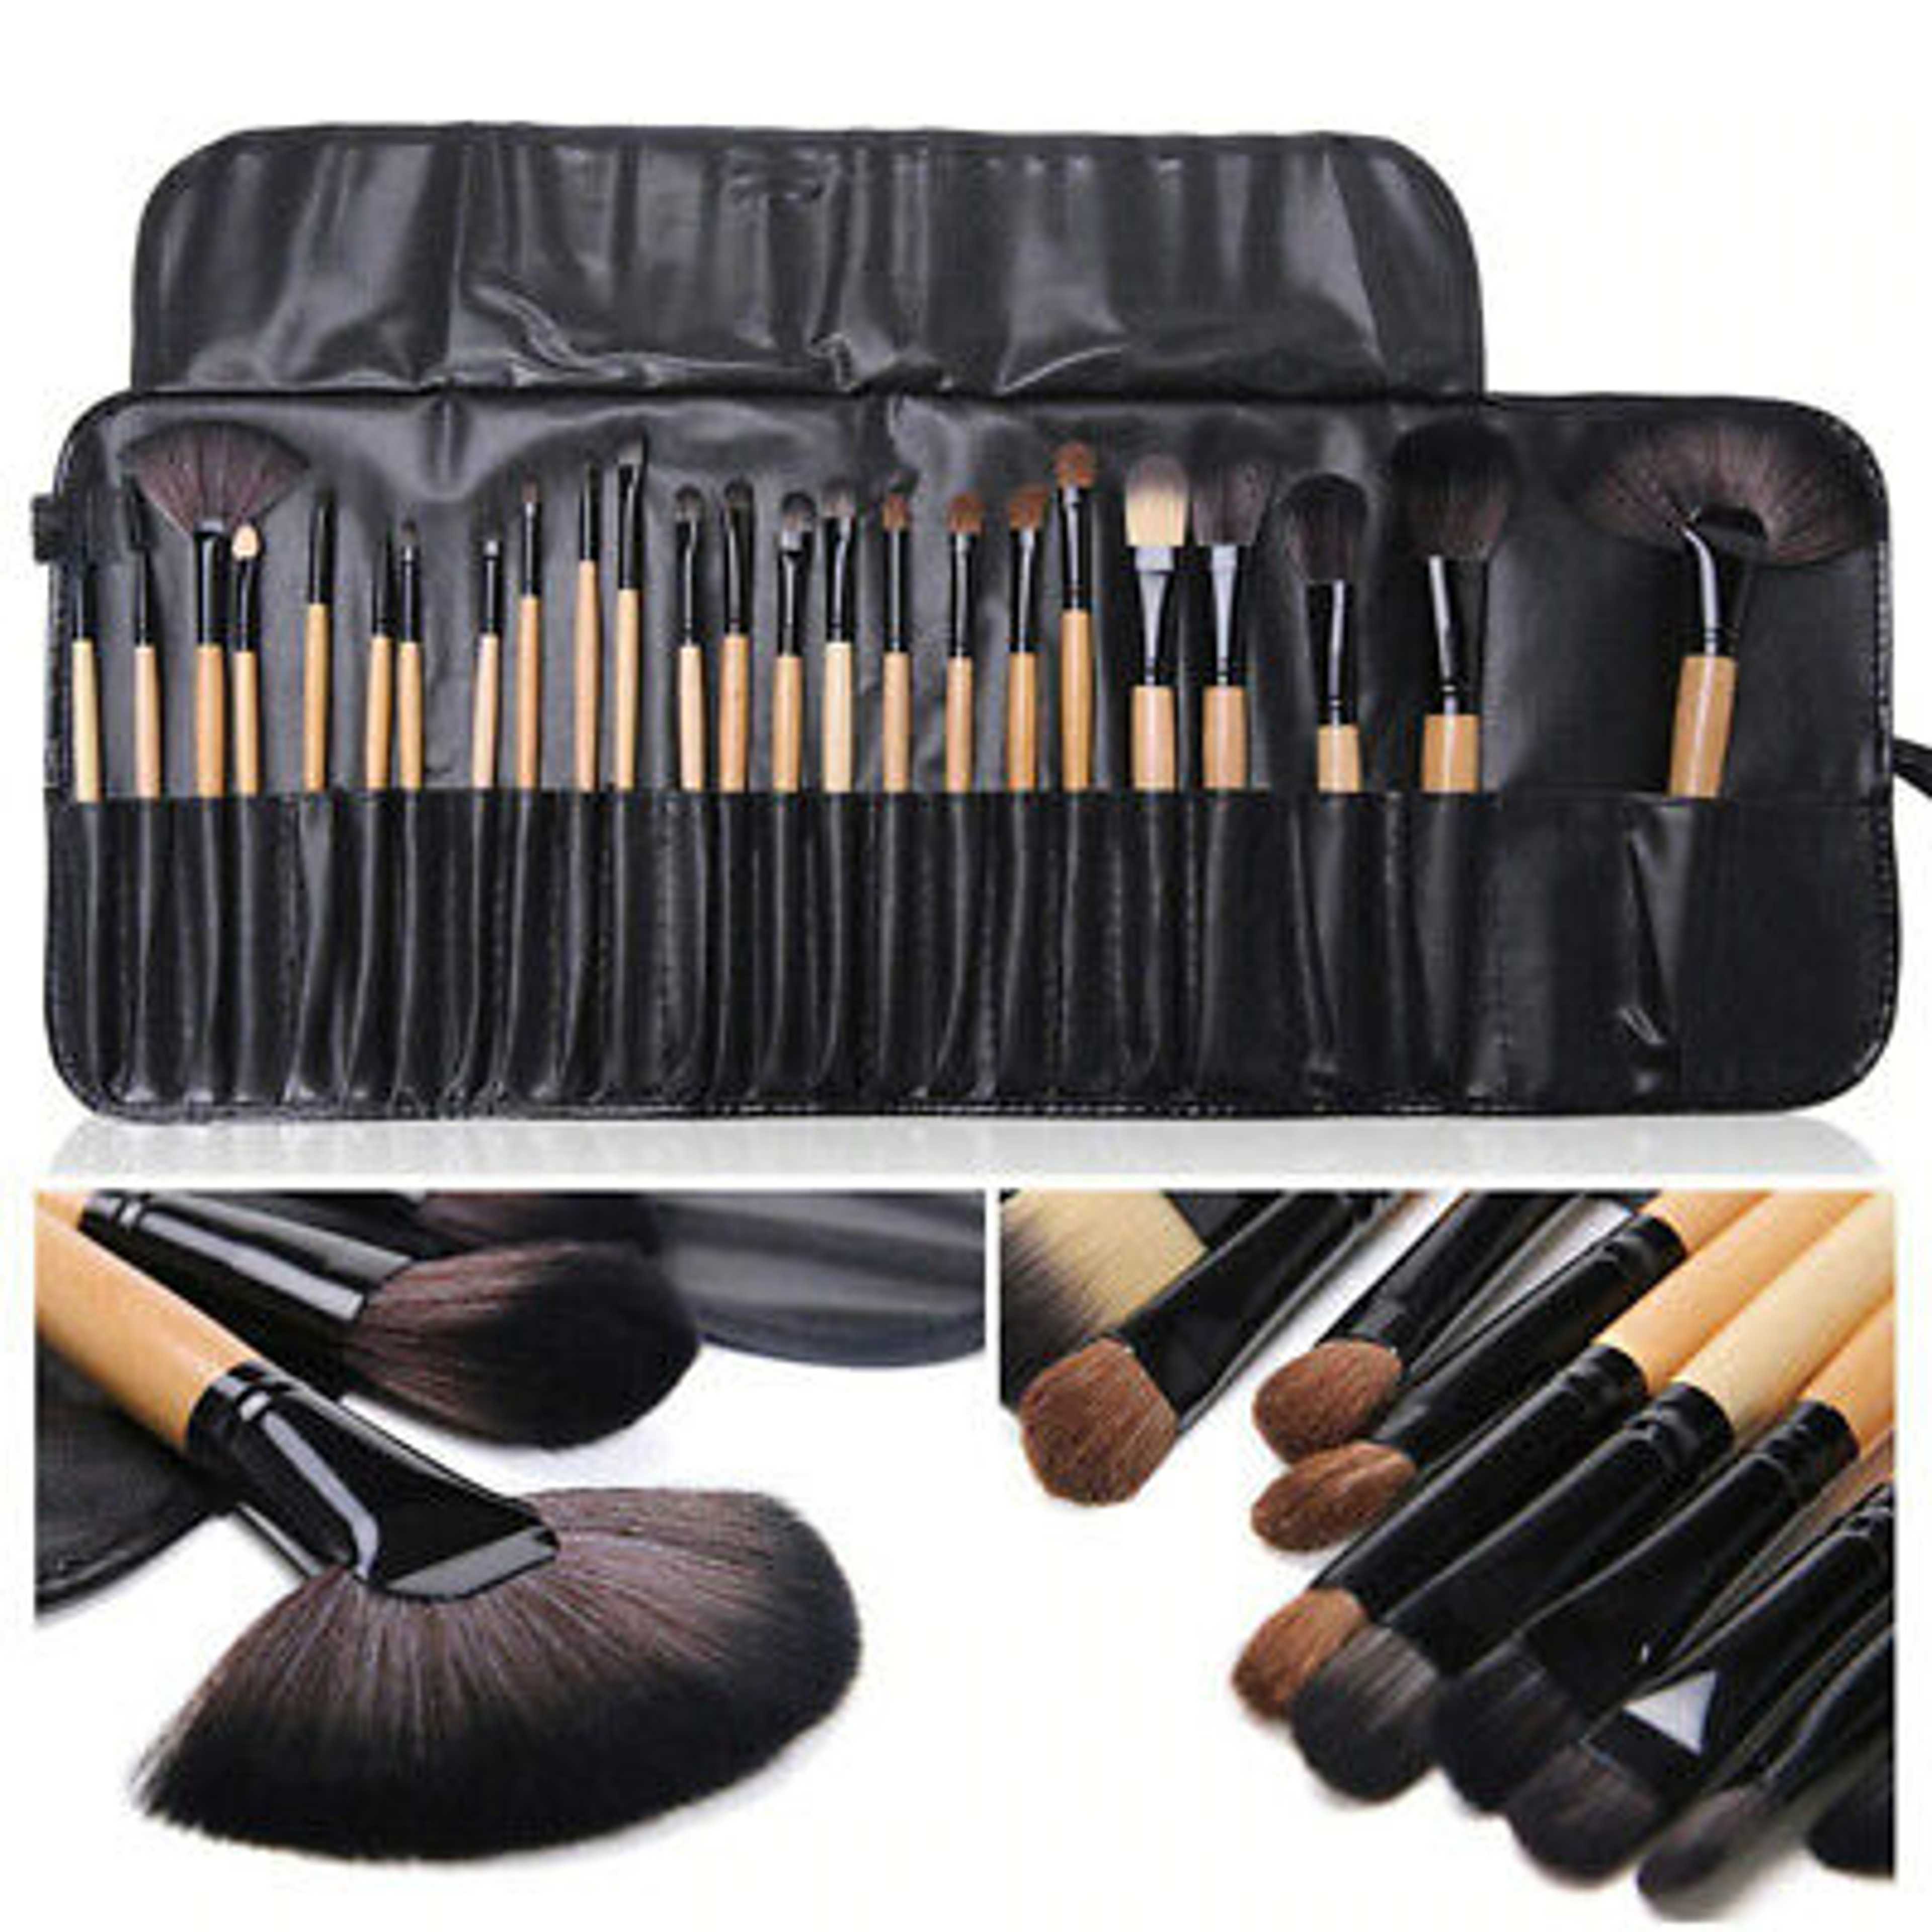 24pc Make-up Brush Set